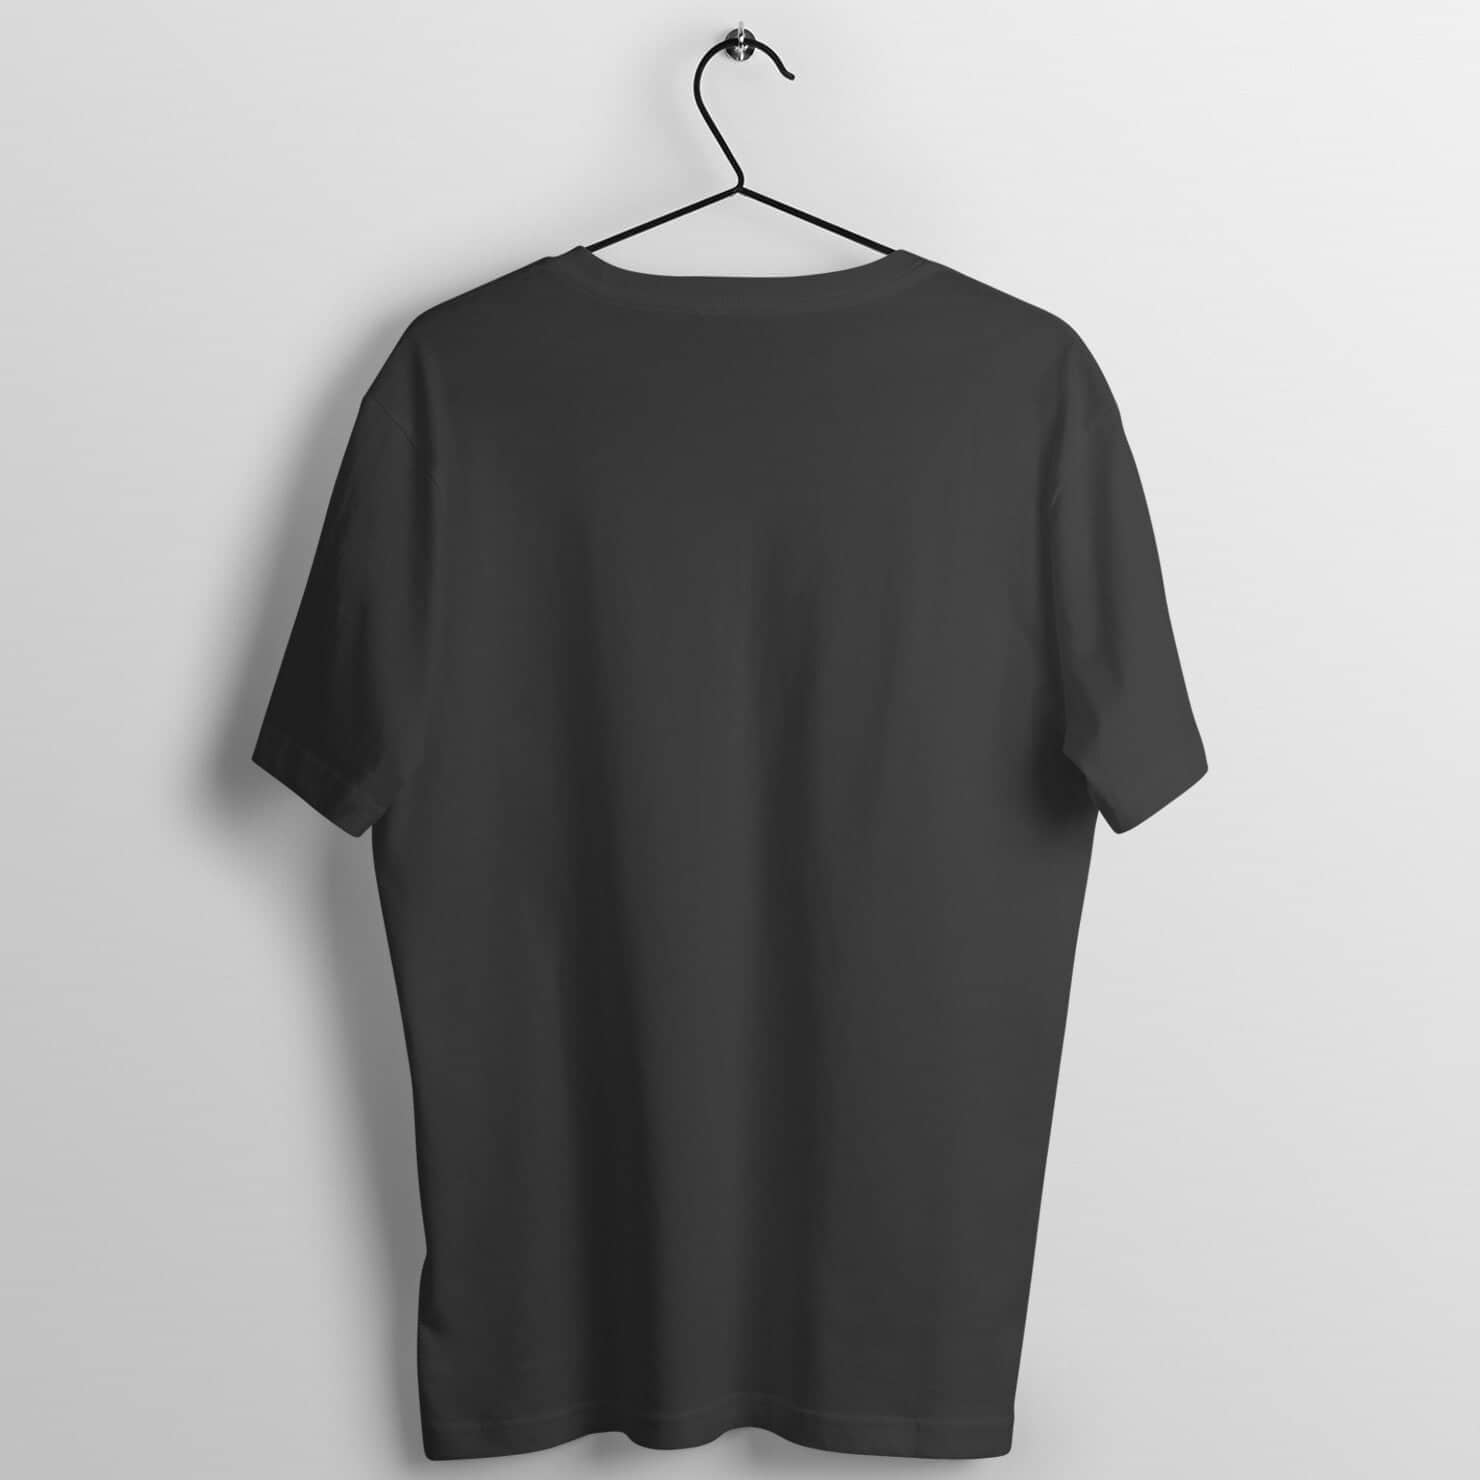 Goldorak Grendizer Exclusive Black T Shirt for Men and Women Printrove 